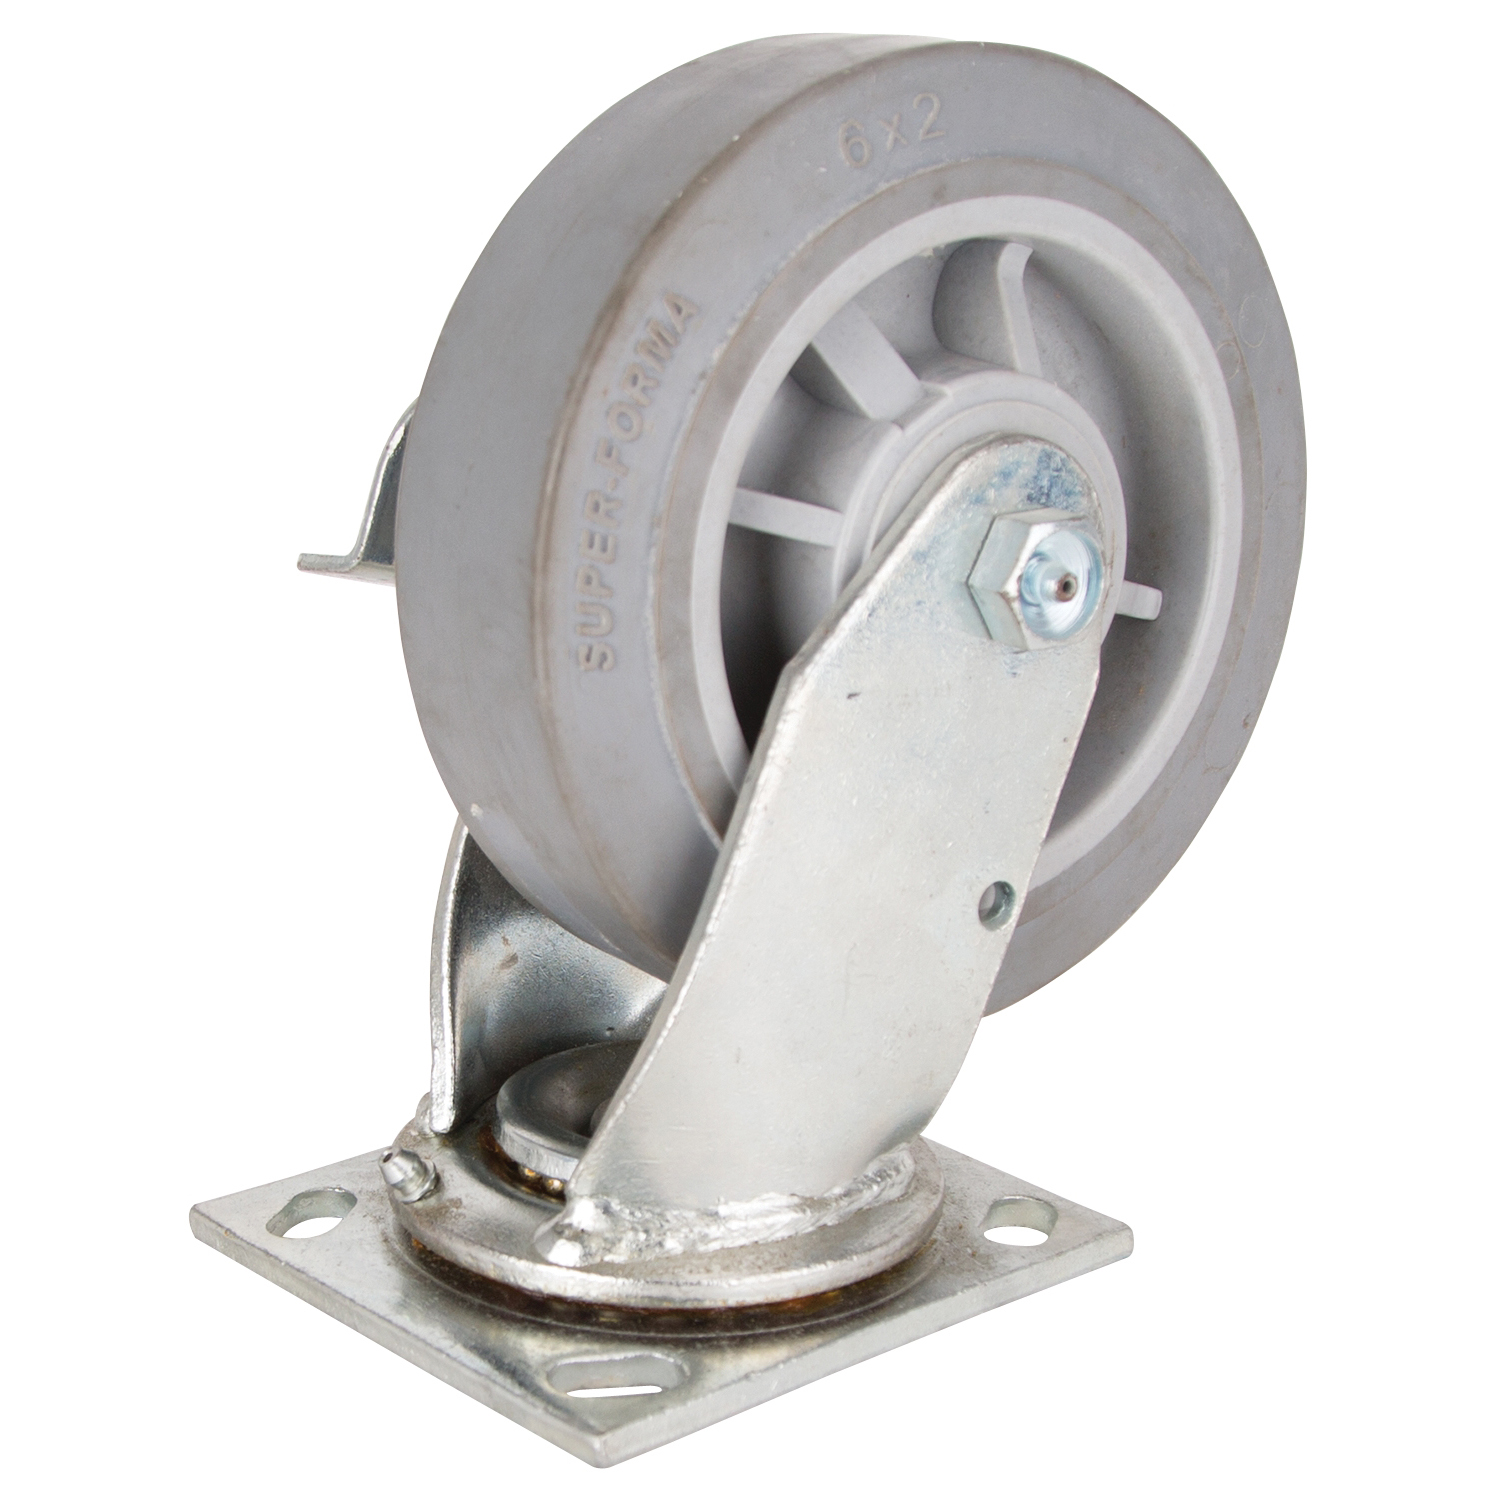 JC-T06 Swivel/Brake Caster, 6 in Dia Wheel, 2 in W Wheel, Thermoplastic Rubber Wheel, Gray, 500 lb